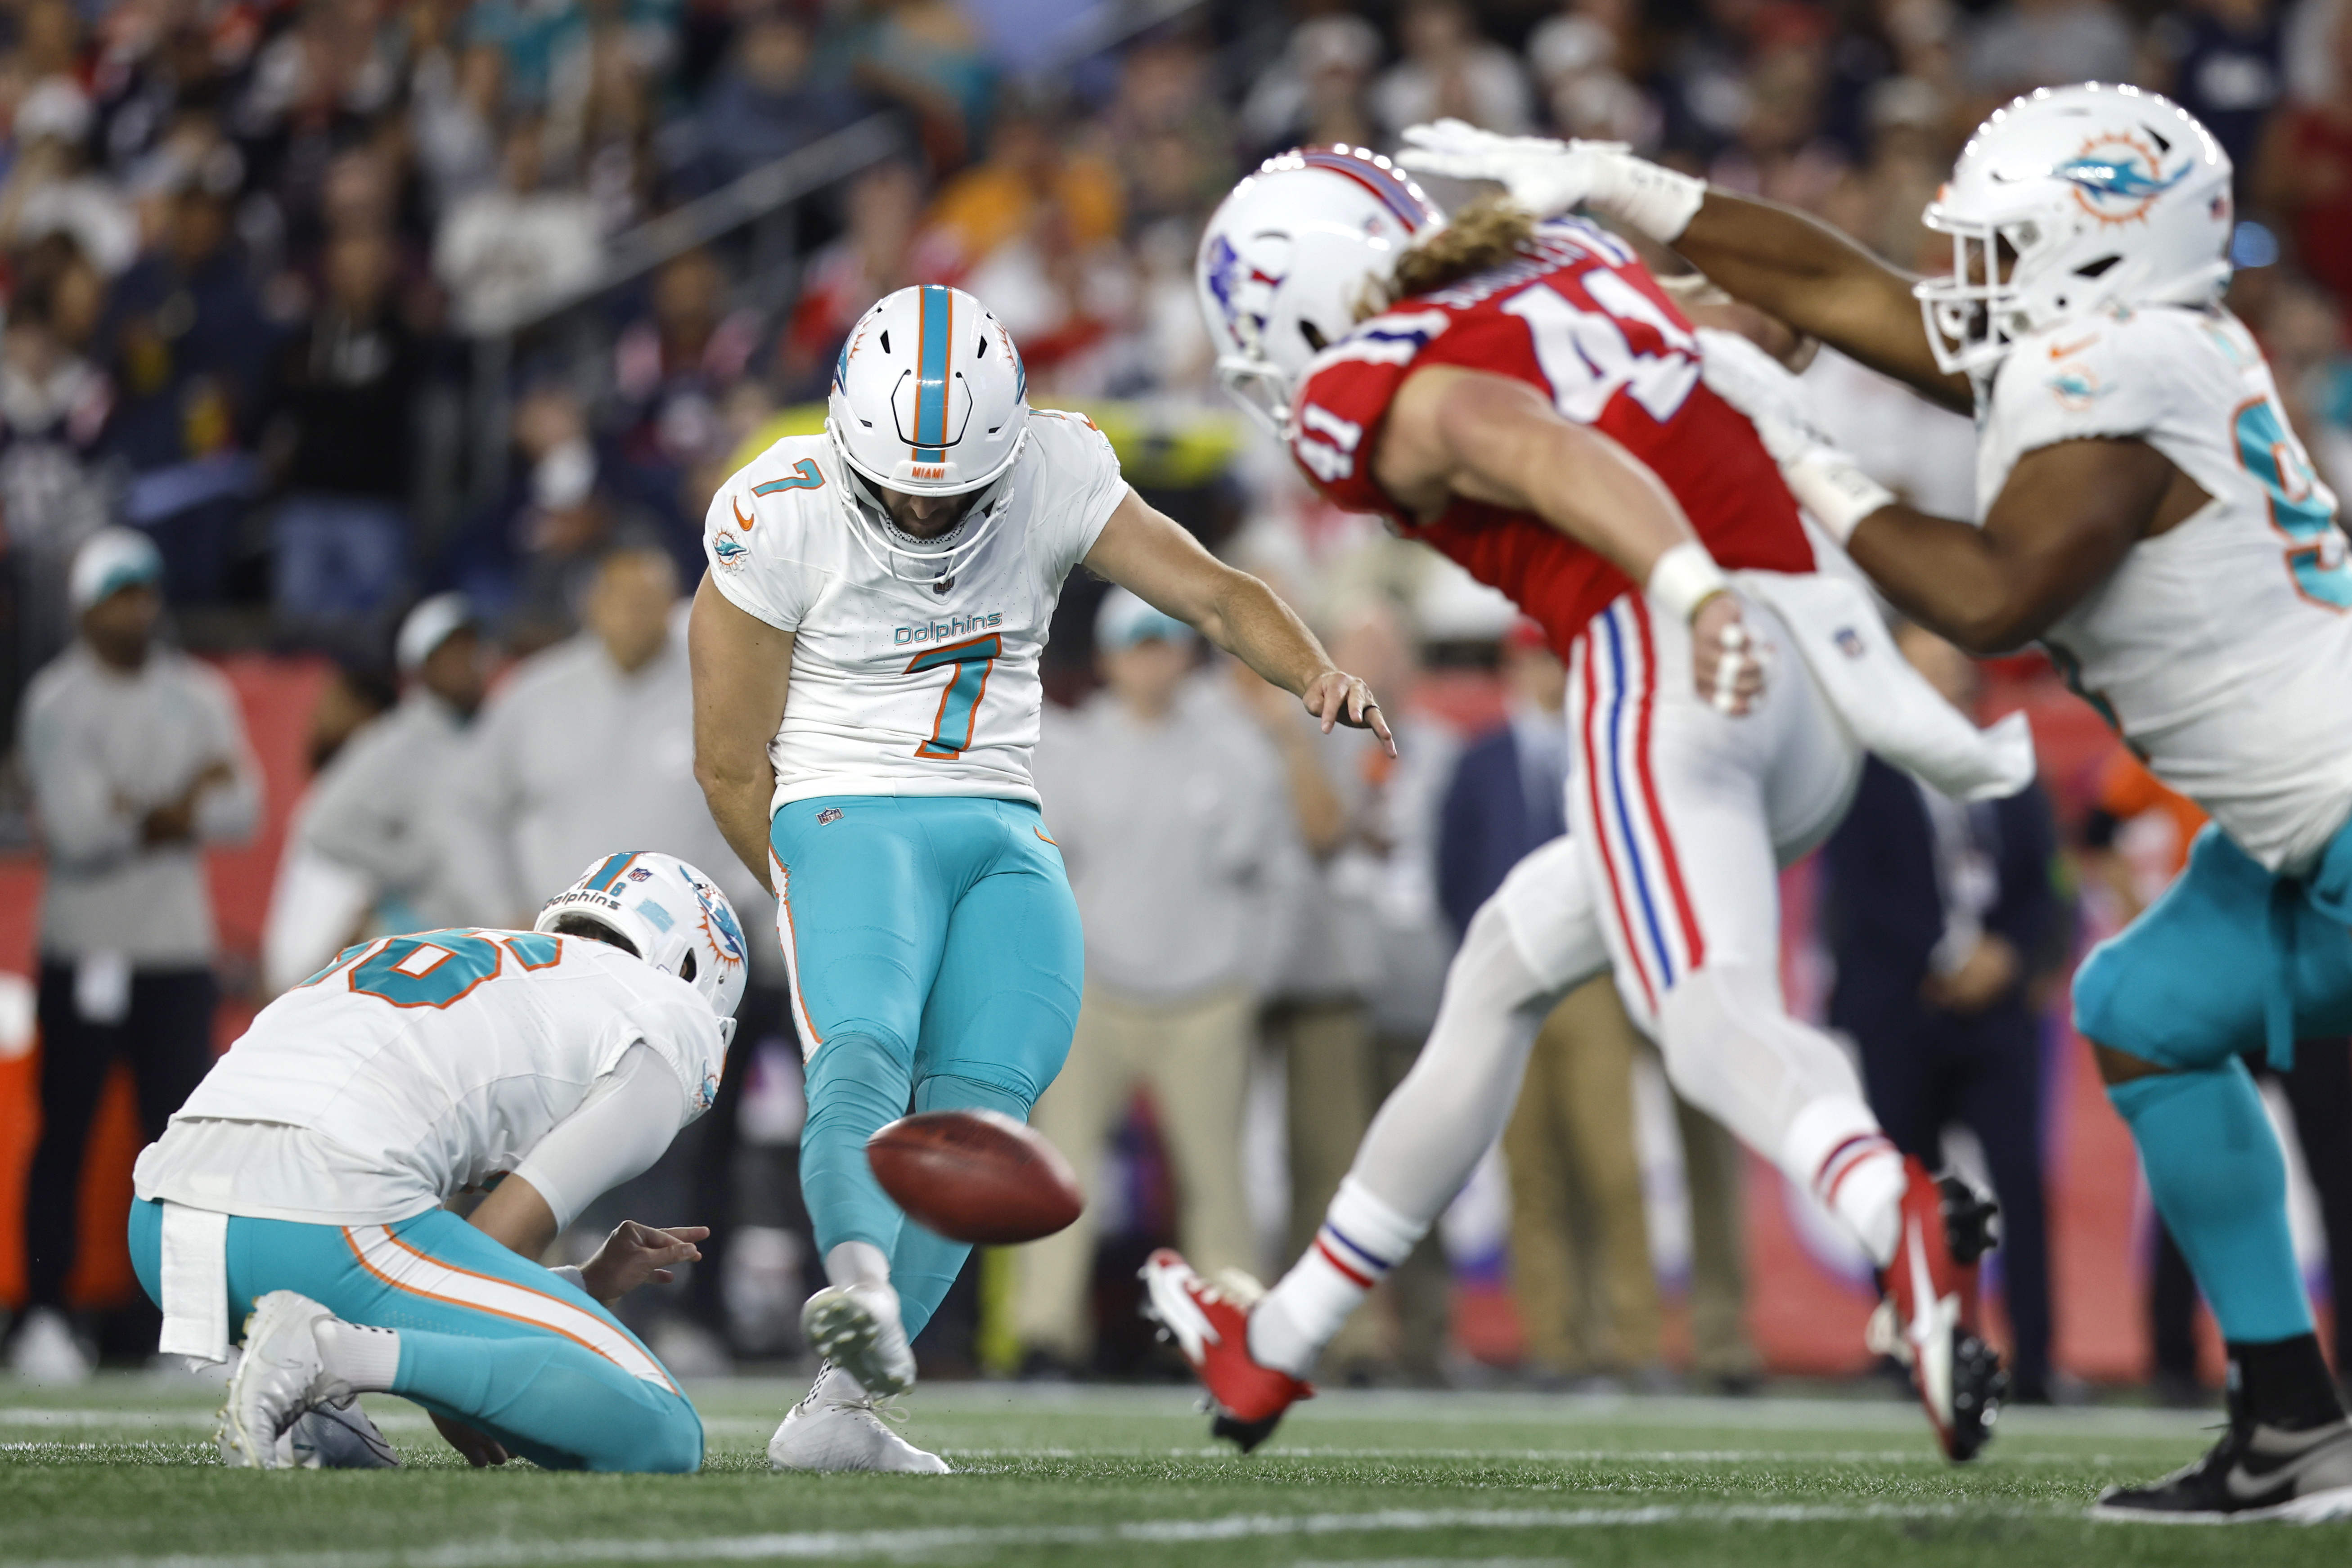 Futebol Americano New England Patriots Report: Miami Dolphins vs